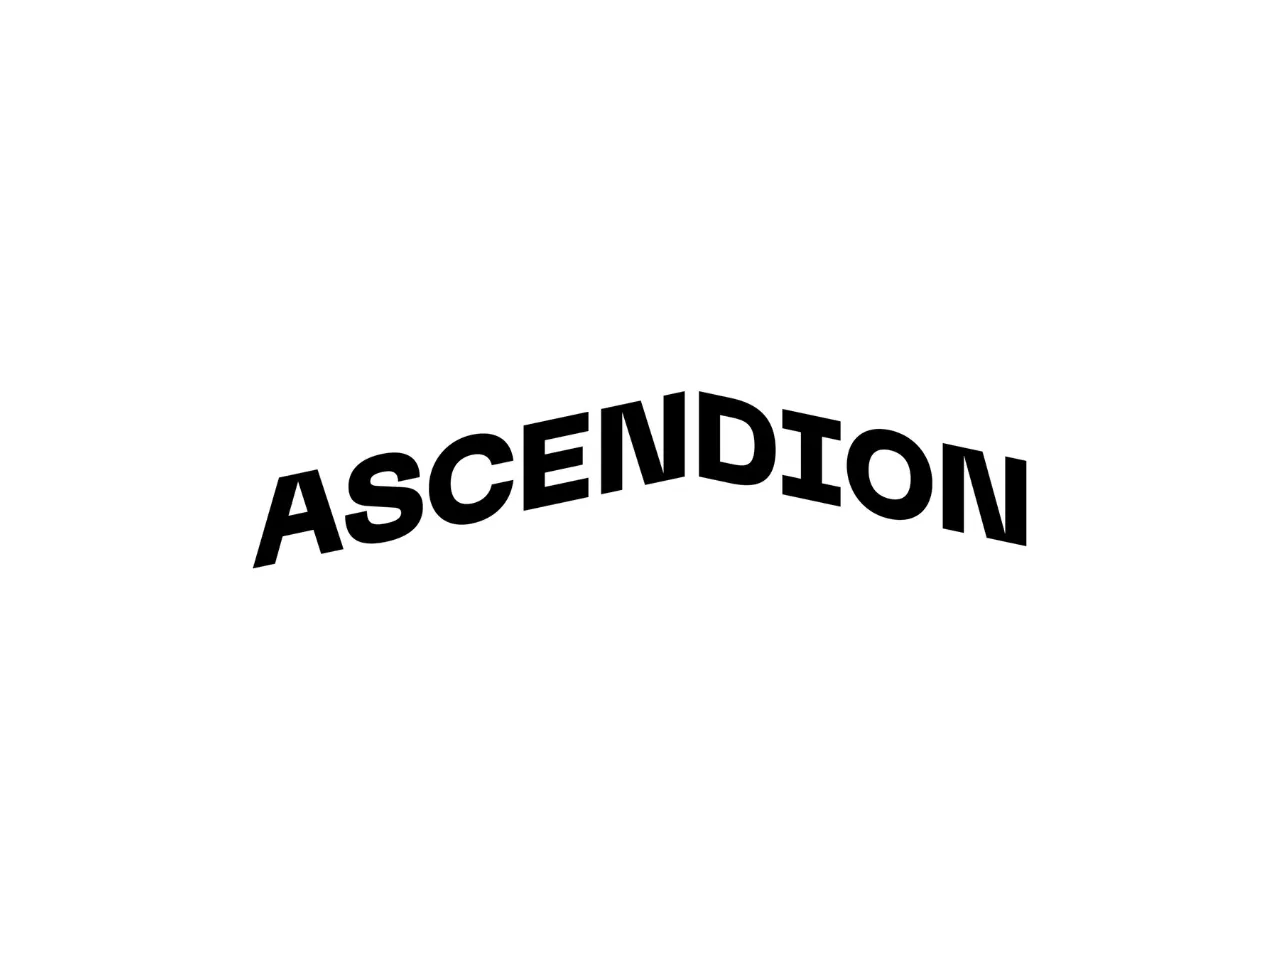  Ascendion Logo